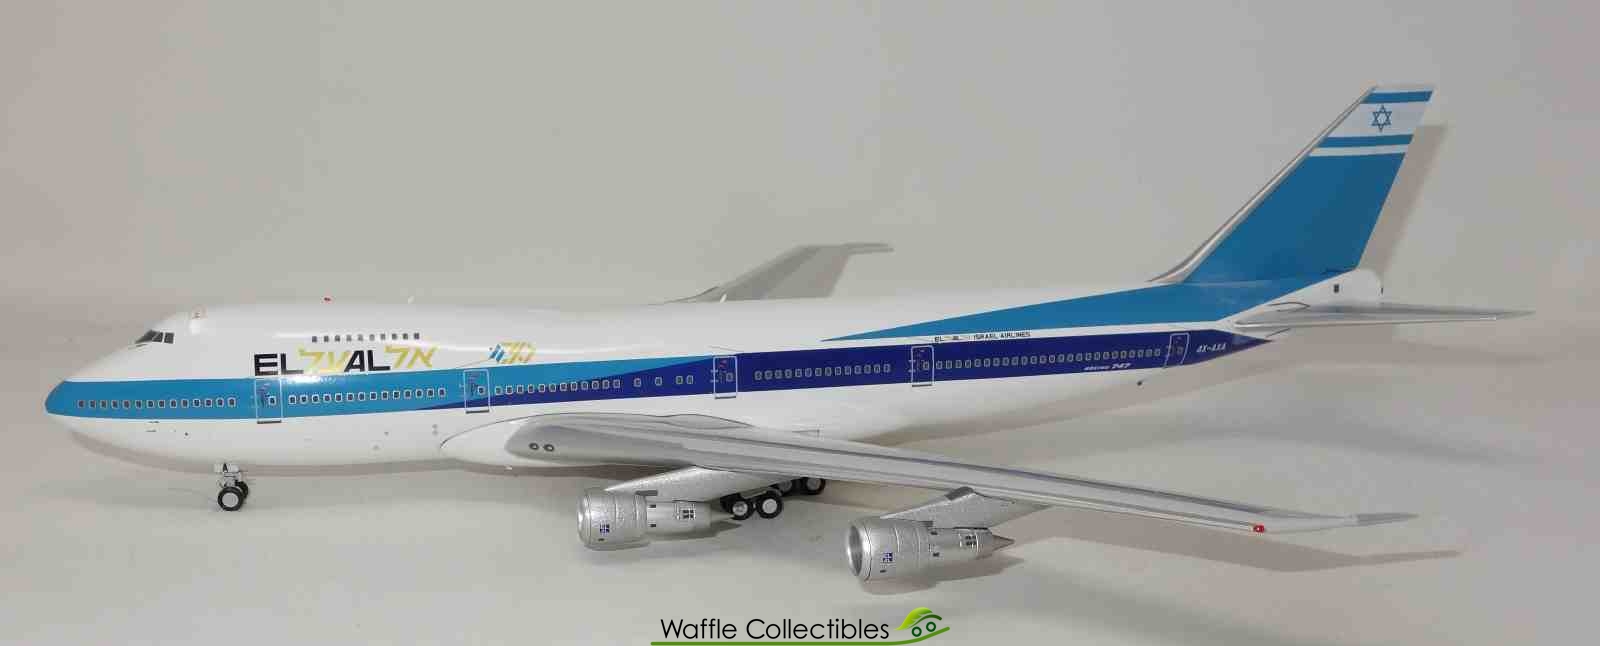 1:200 Inflight200 El Al Boeing B 747-200 4X-AXA IF742LY1021